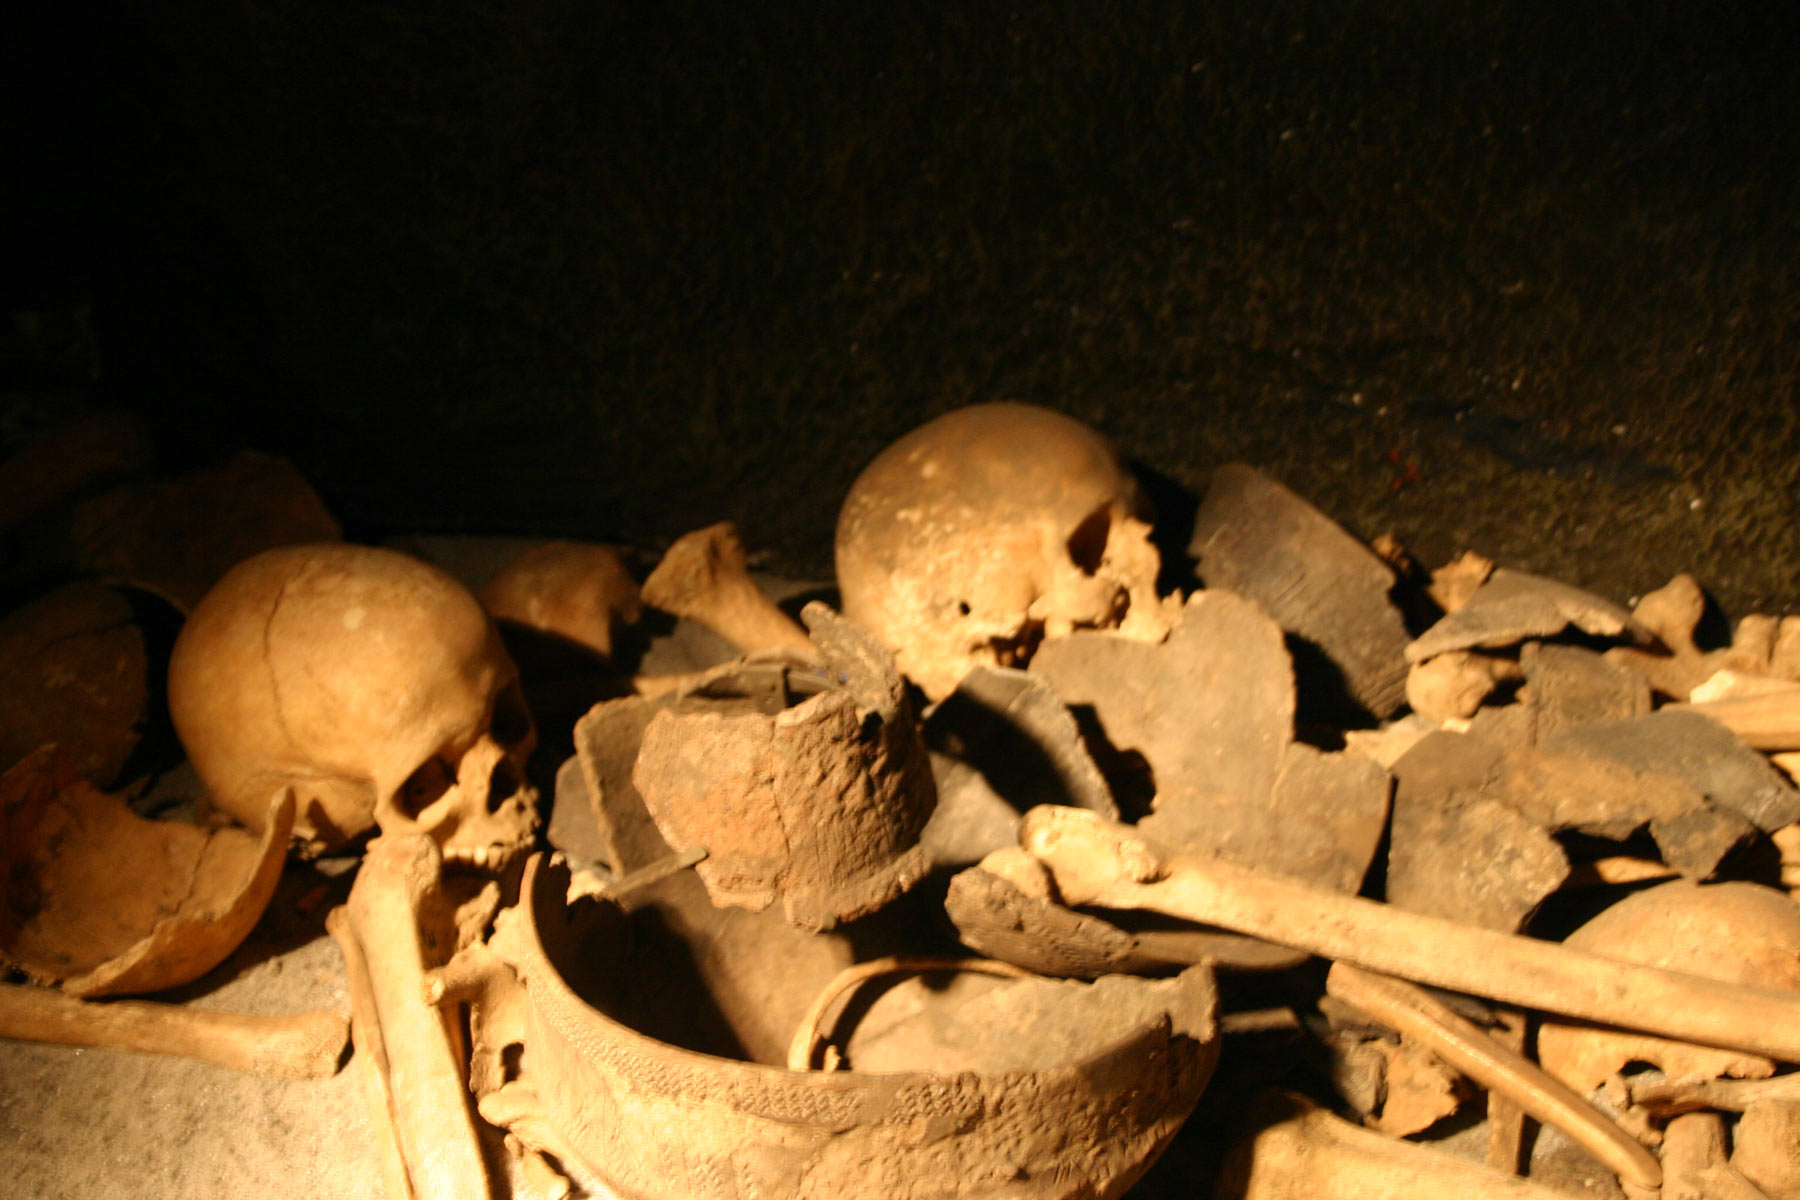 Pile of bones and skulls photo